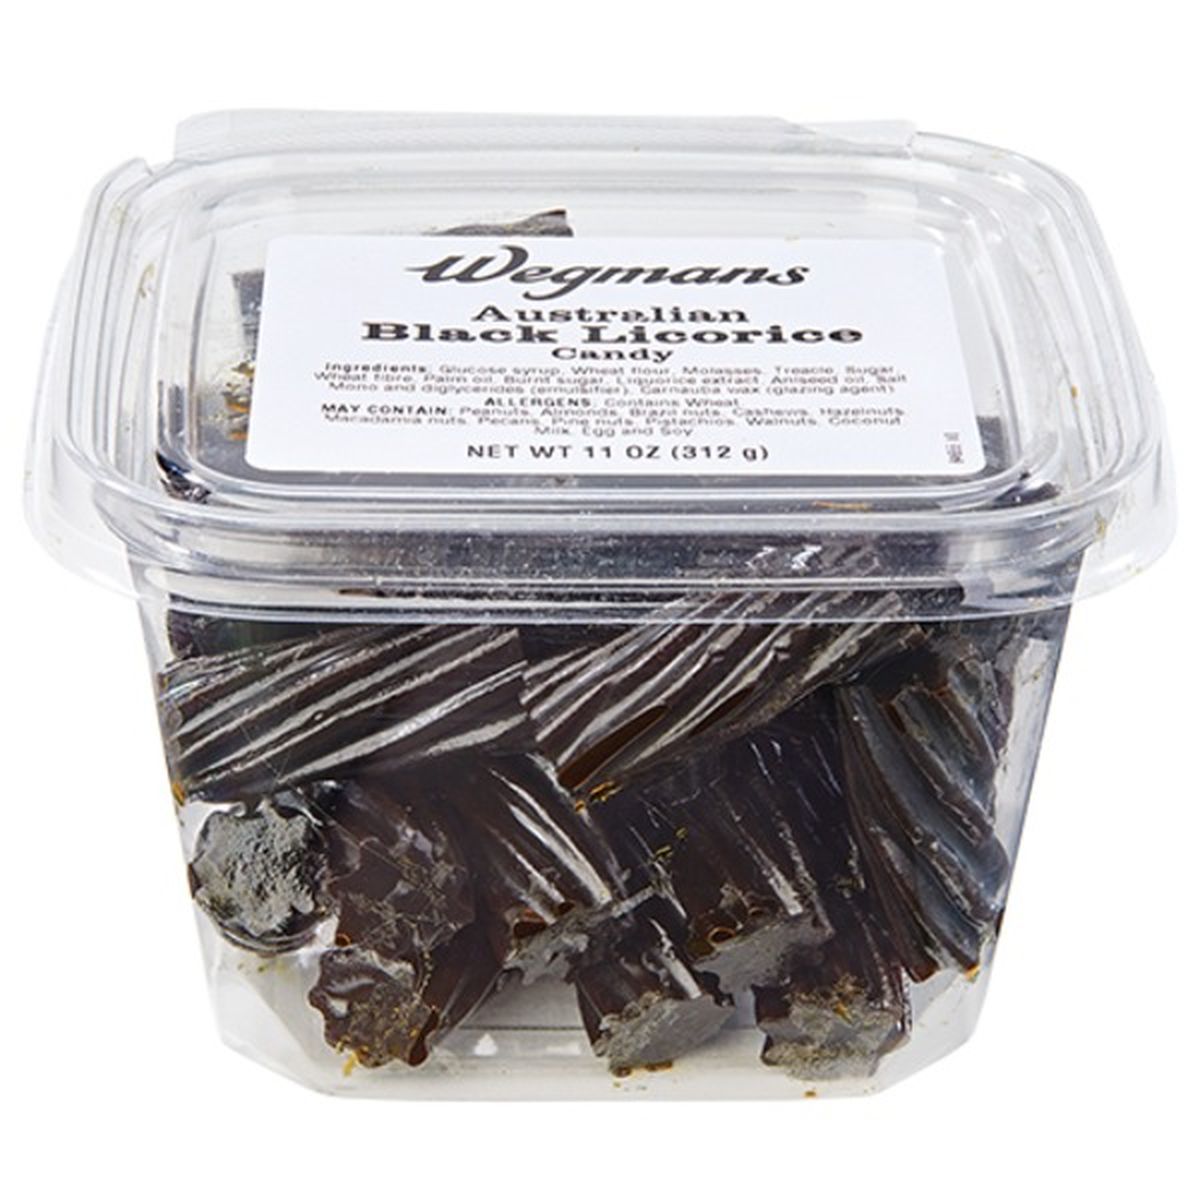 Calories in Wegmans Australian Black Licorice Candy